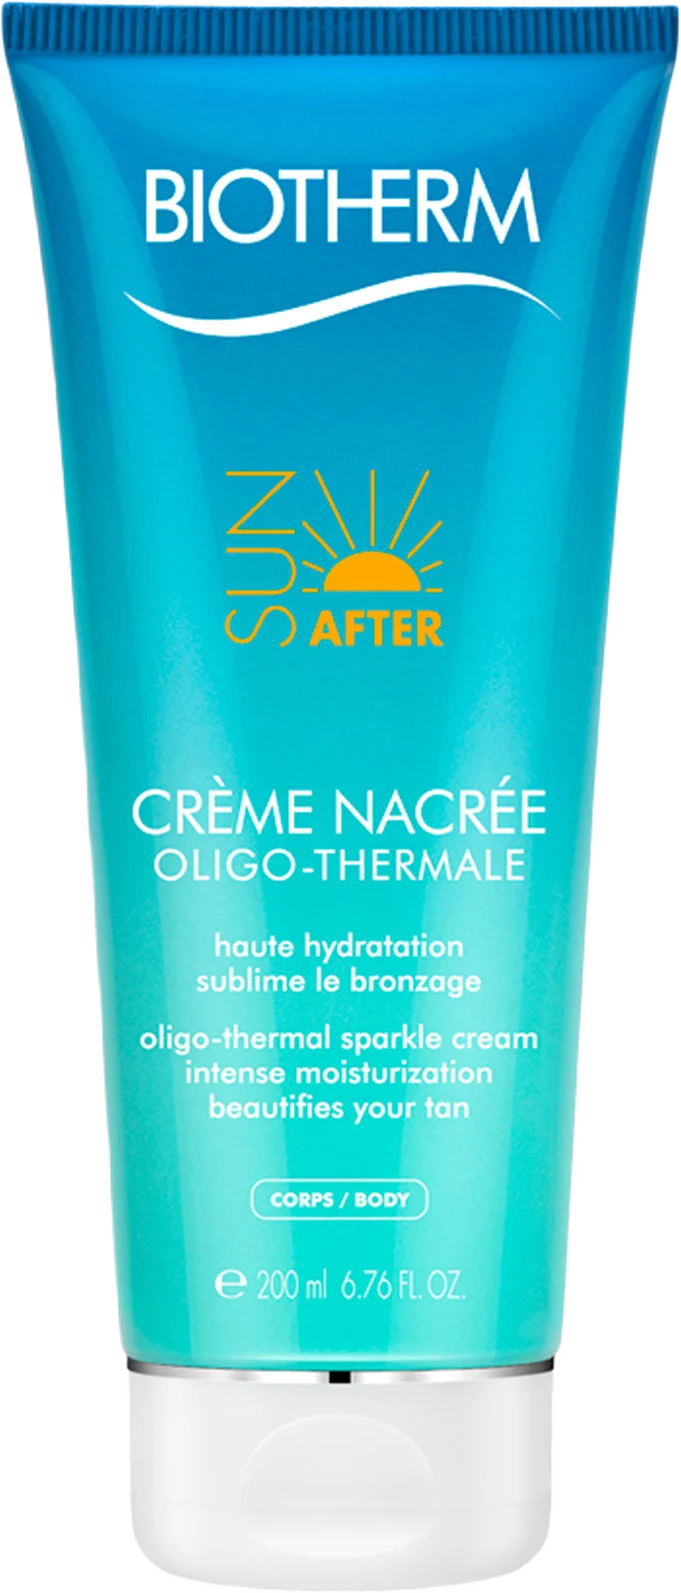 Crème Nacrée Oligo-Thermale Sparkle Cream